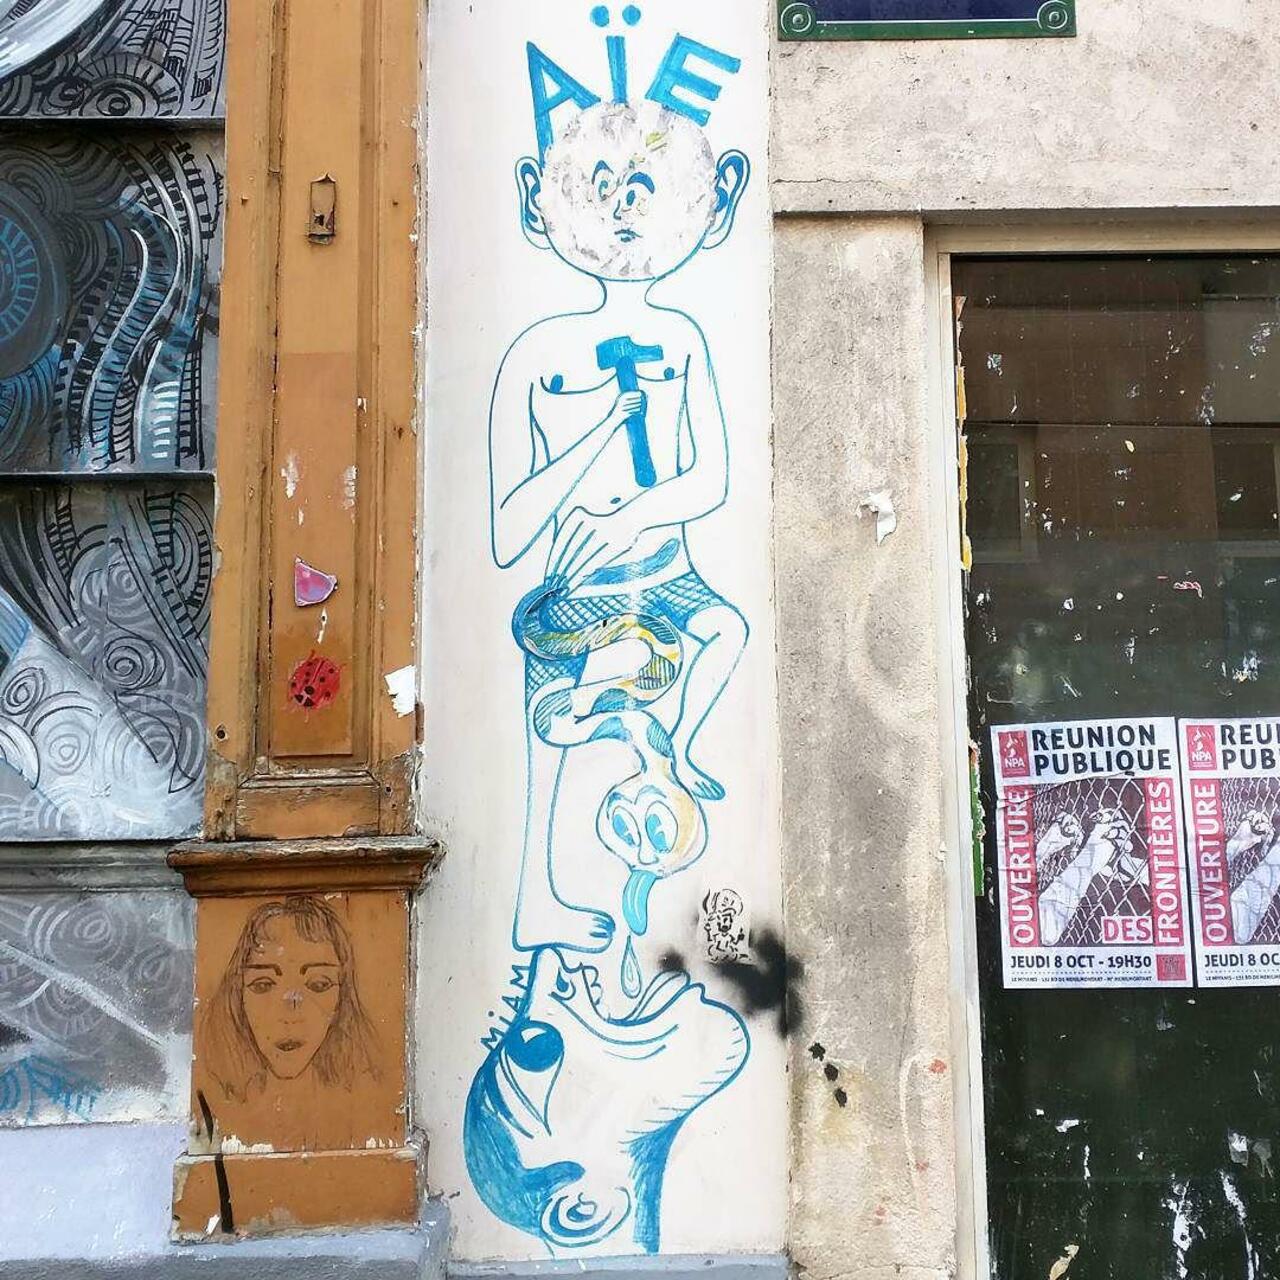 #Paris #graffiti photo by @alphaquadra http://ift.tt/1Pe0Sfv #StreetArt http://t.co/iYuzqC1jLm